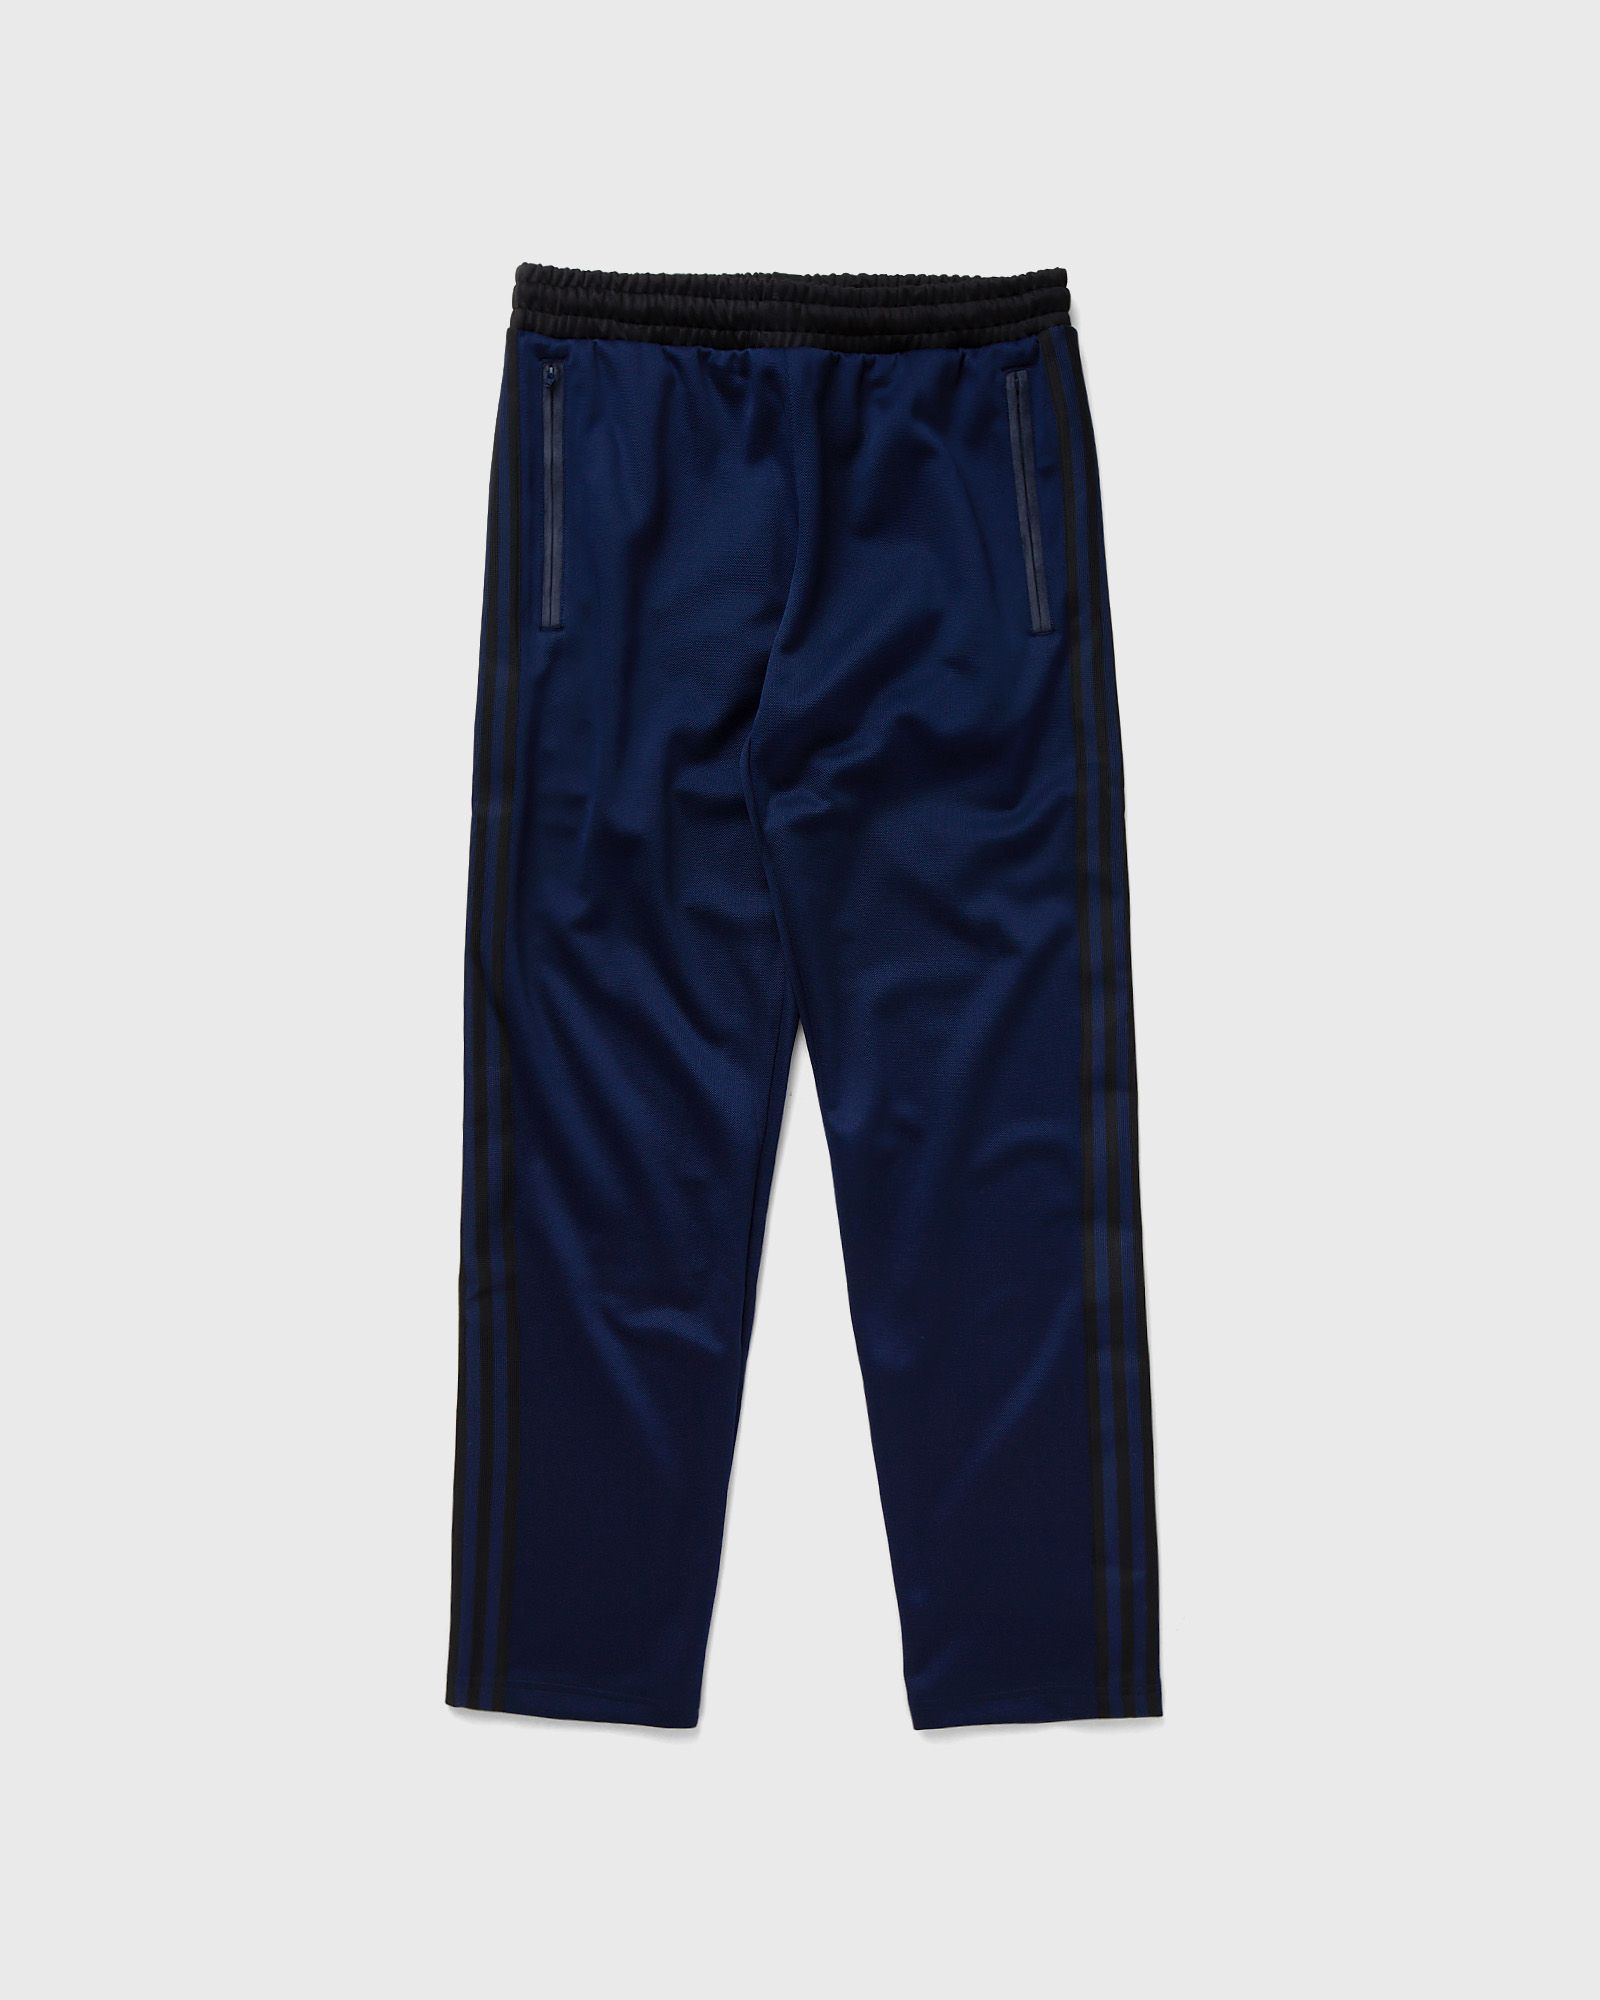 Adidas - premium track pants men track pants blue in größe:l